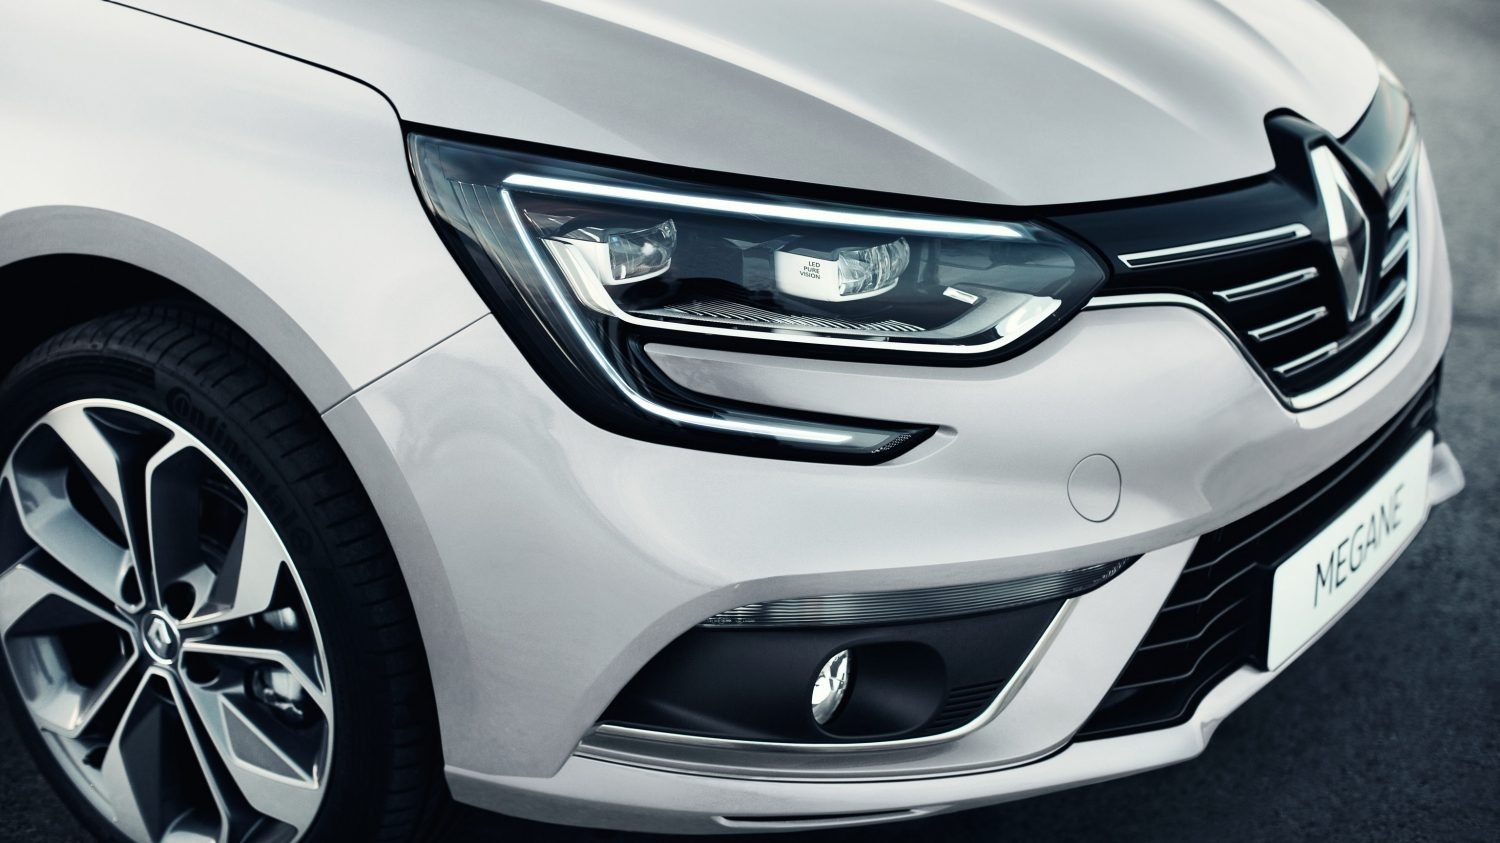 Renault Megane exterior - Headlight